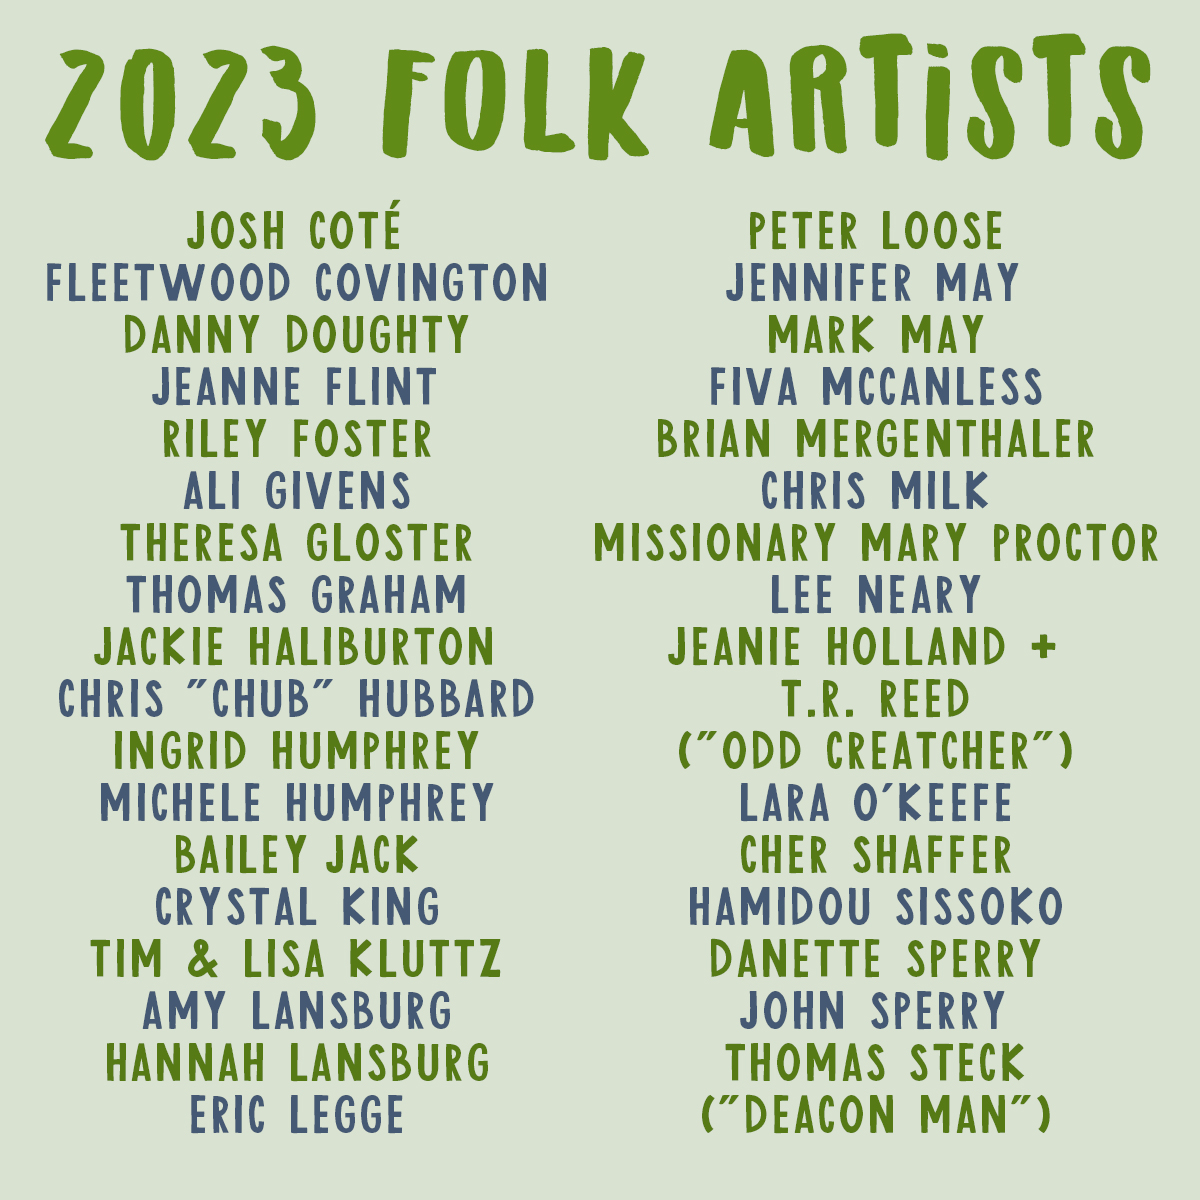 2023 folk artists